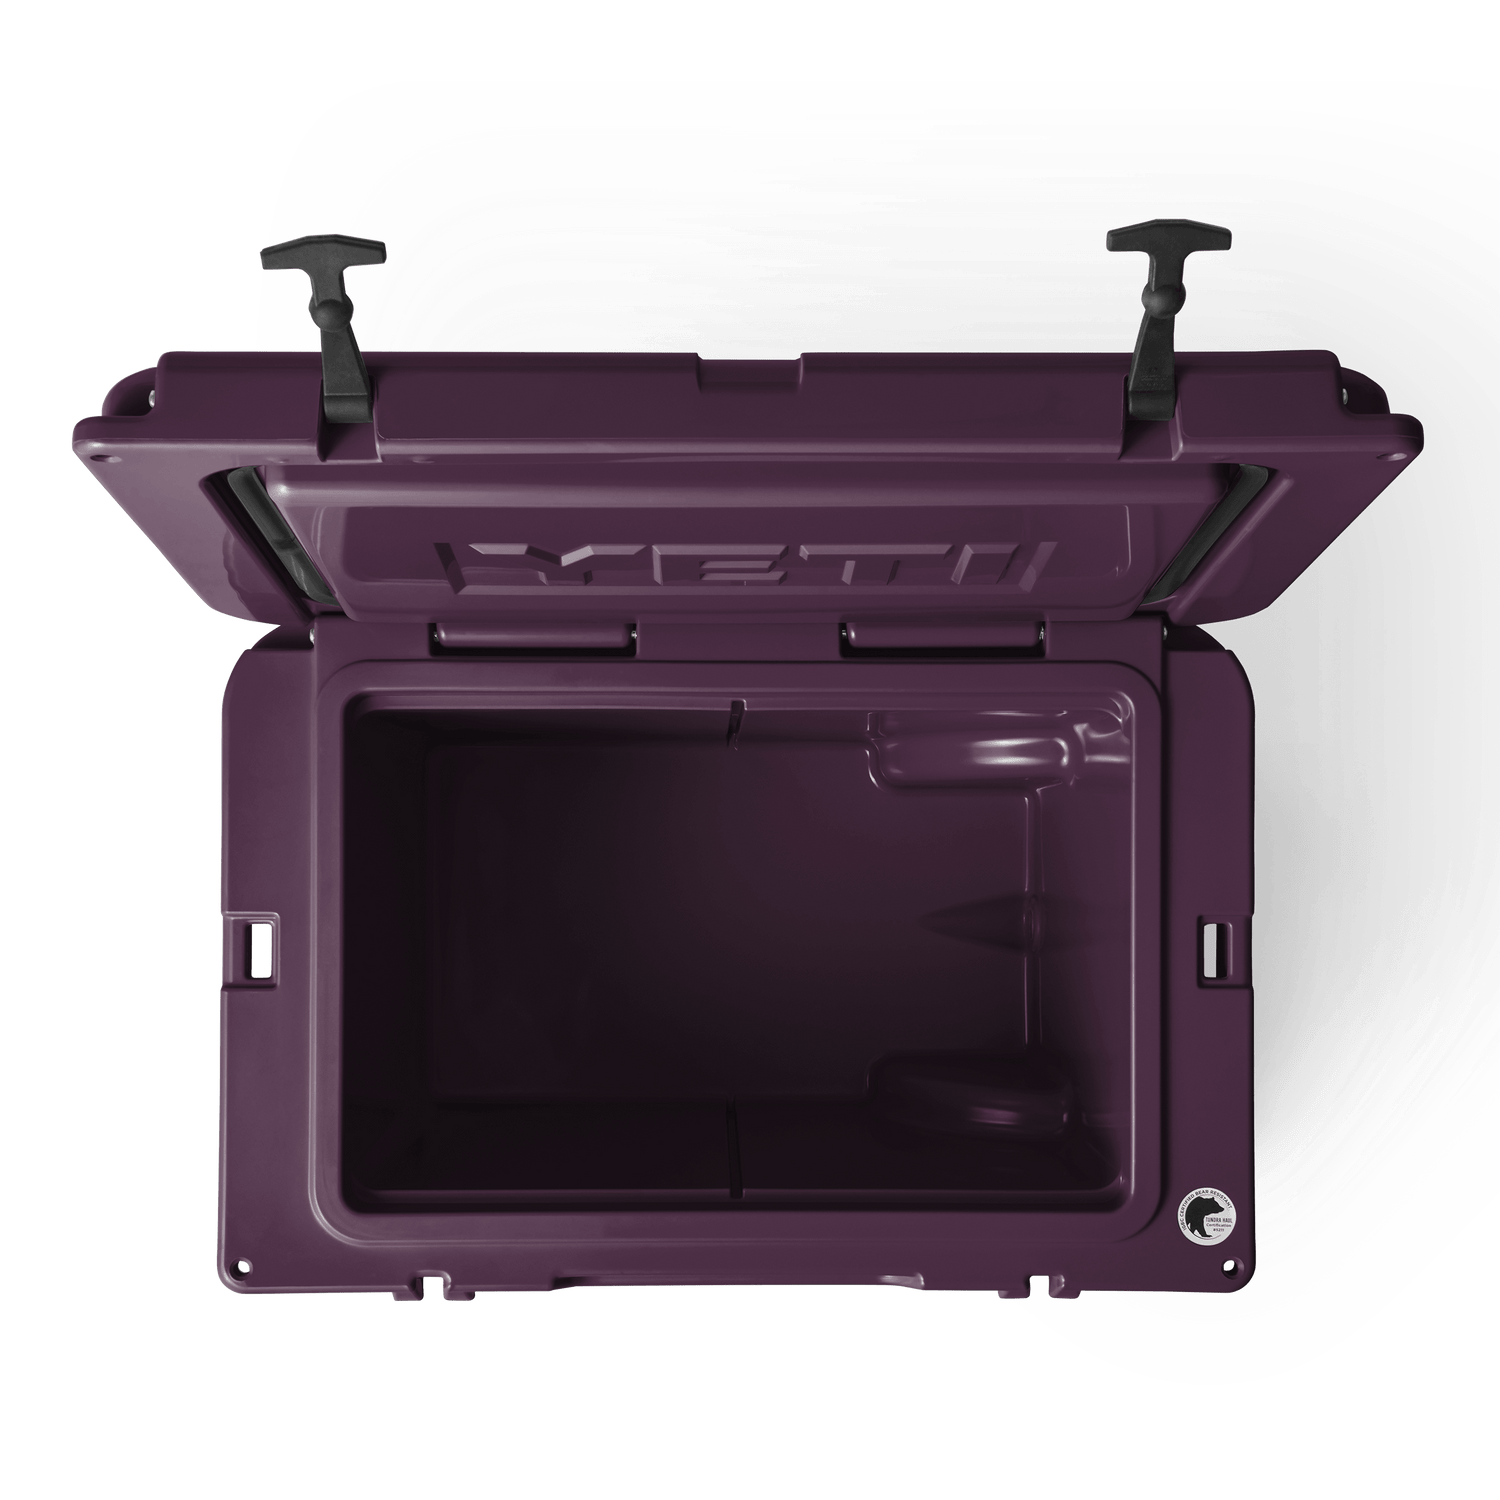 YETI Tundra Haul® Wheeled Cool Box Nordic Purple